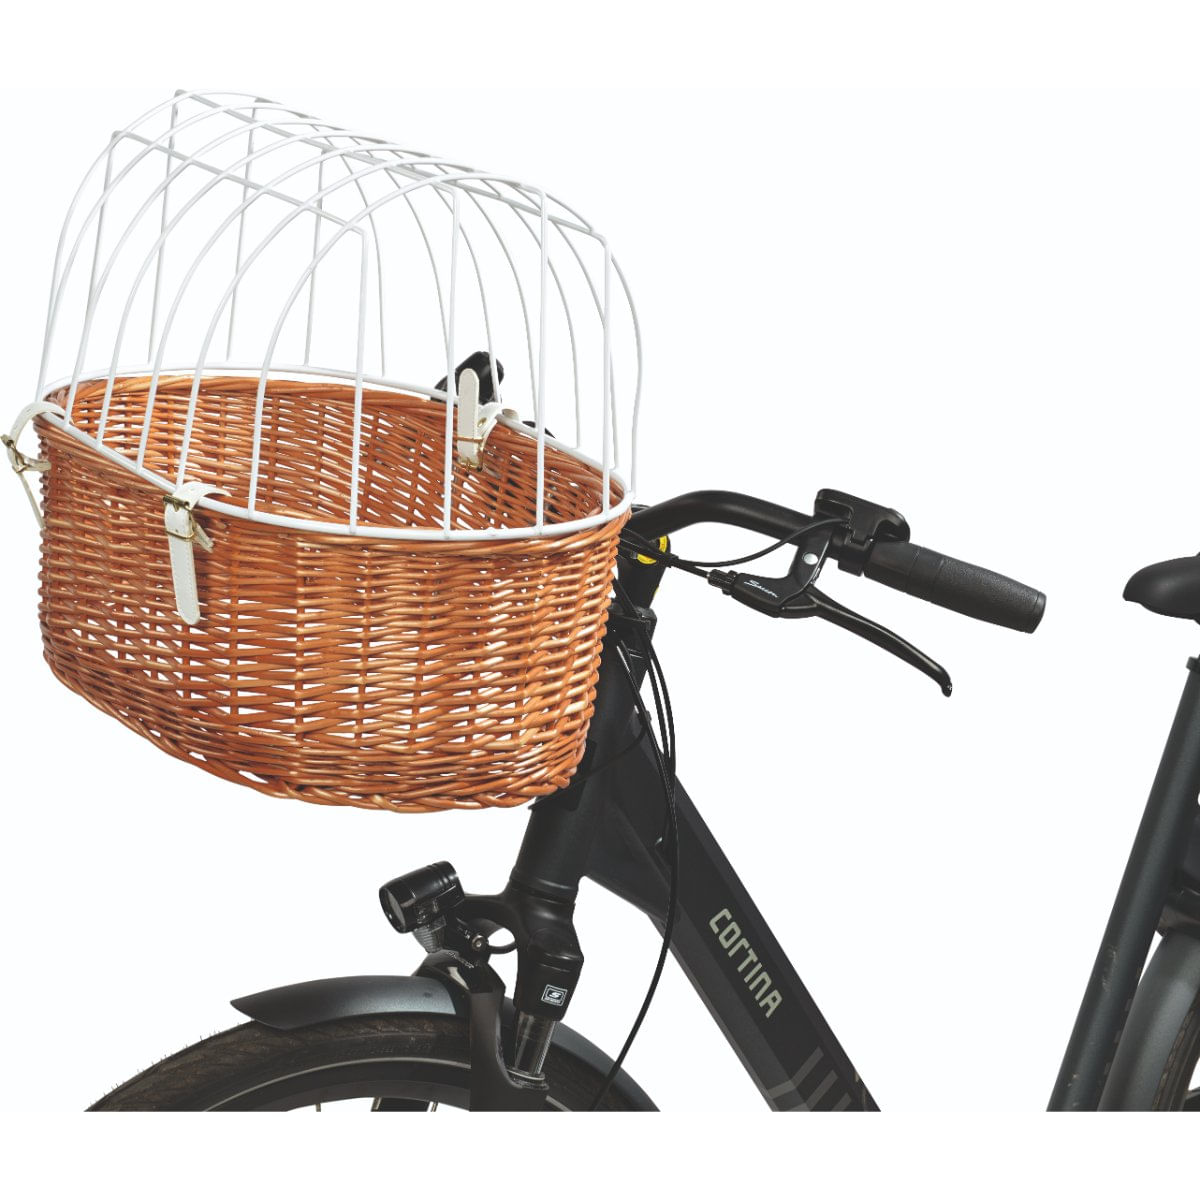 Cestini Vimini biciclette: cesto vimini Online vendita